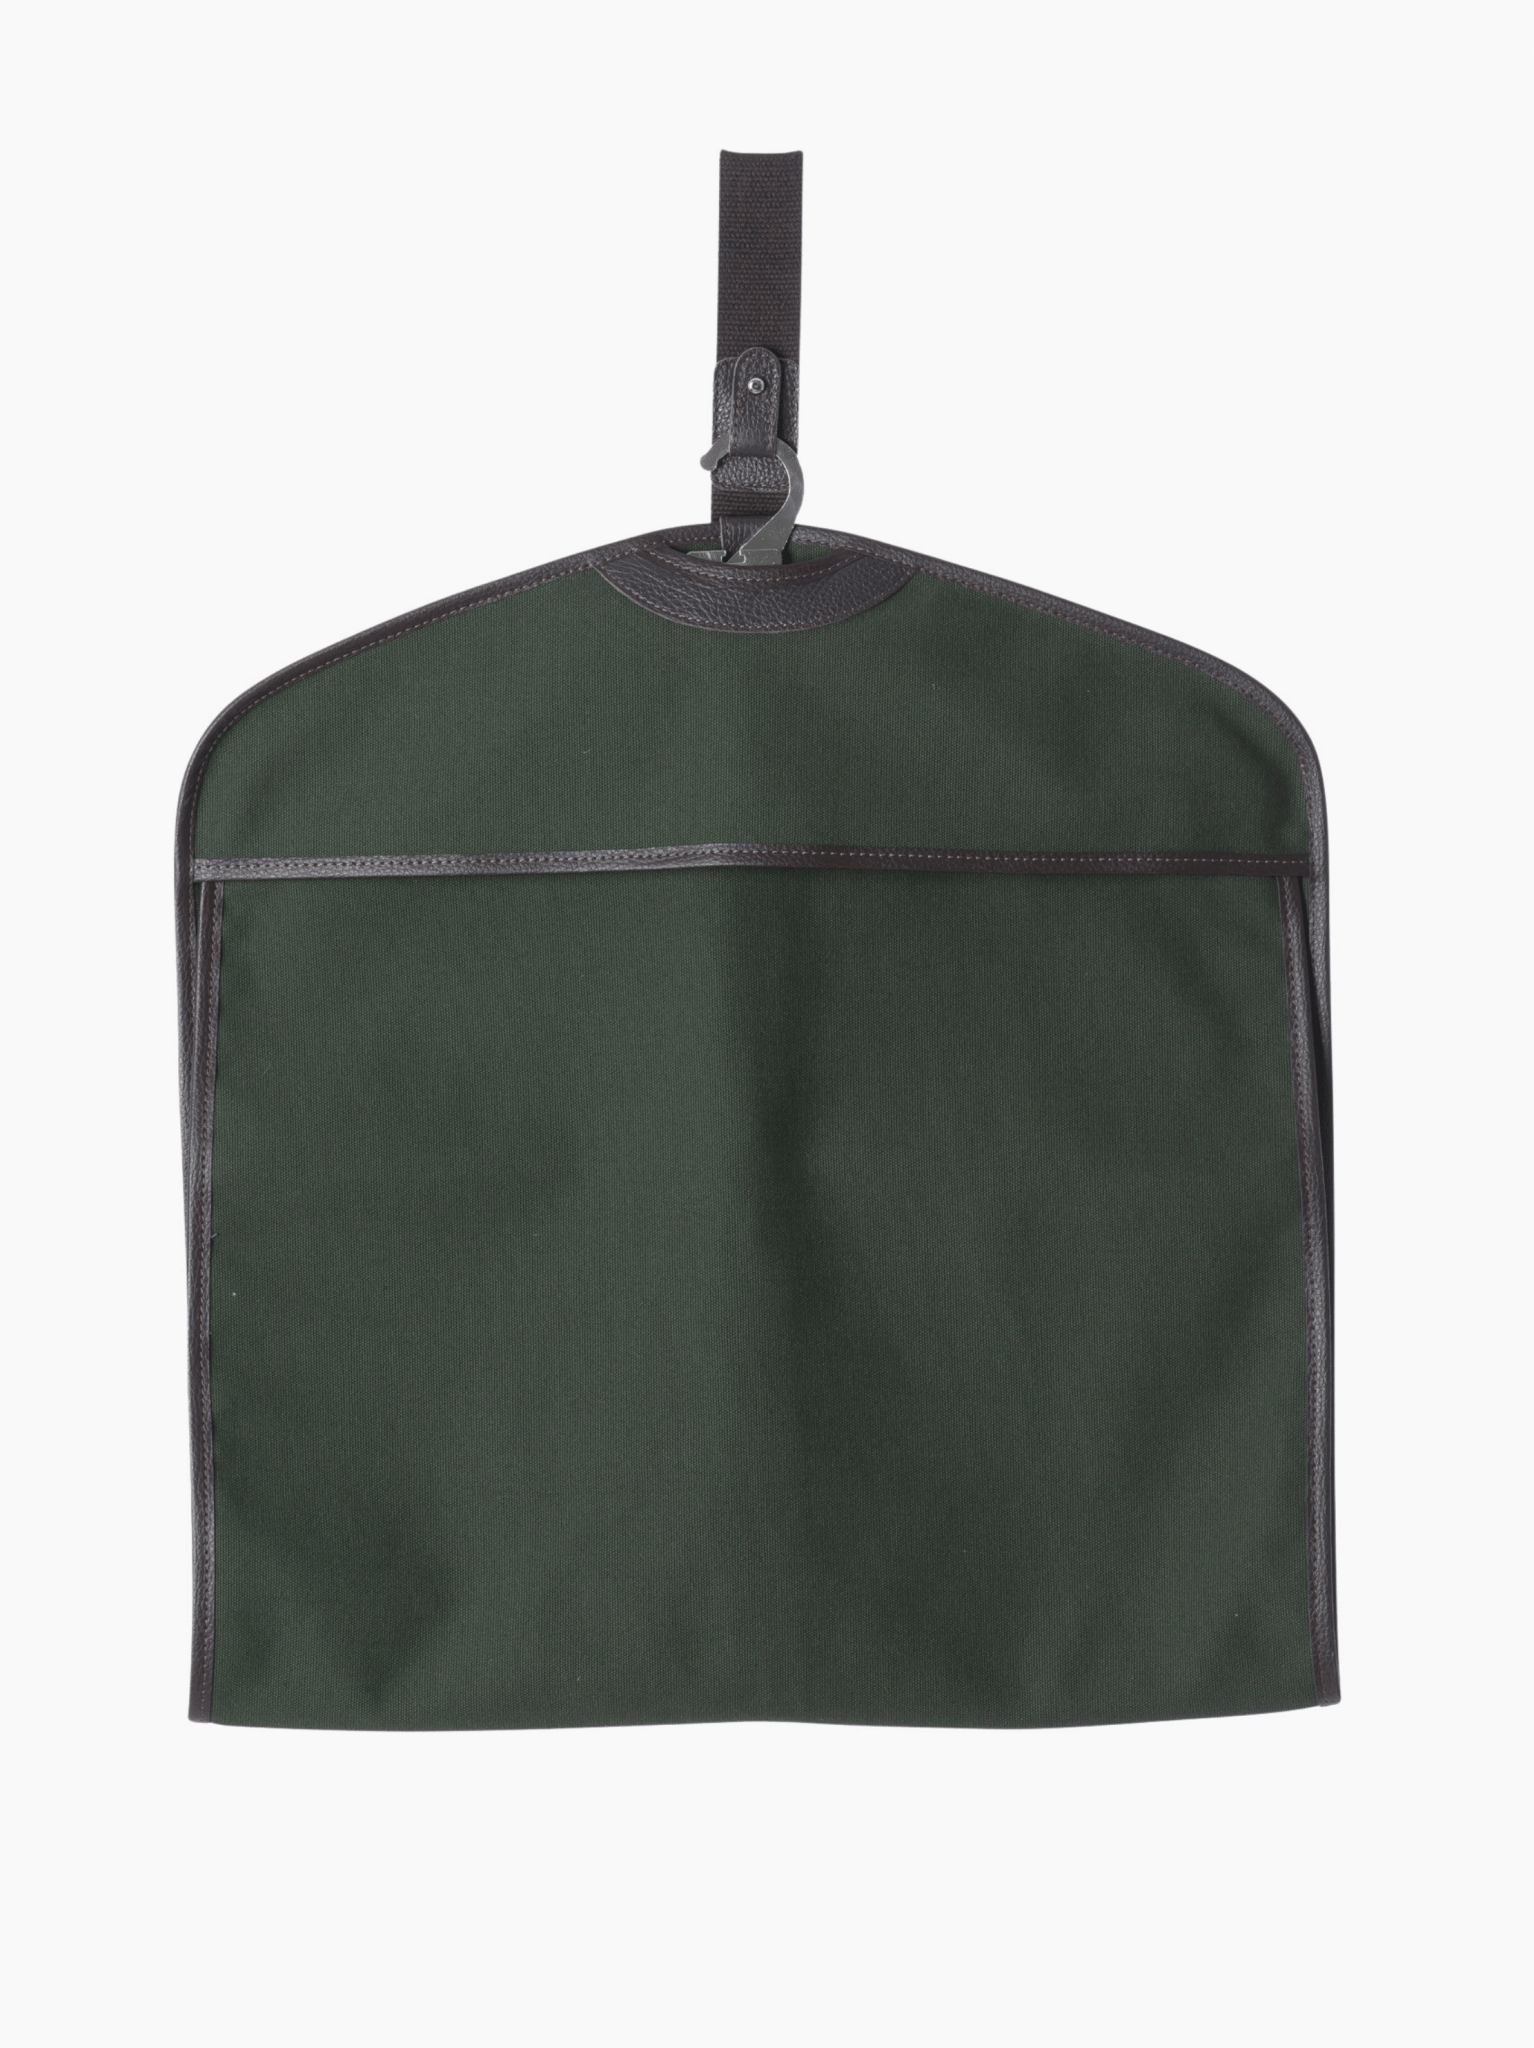 Suit bag in Green